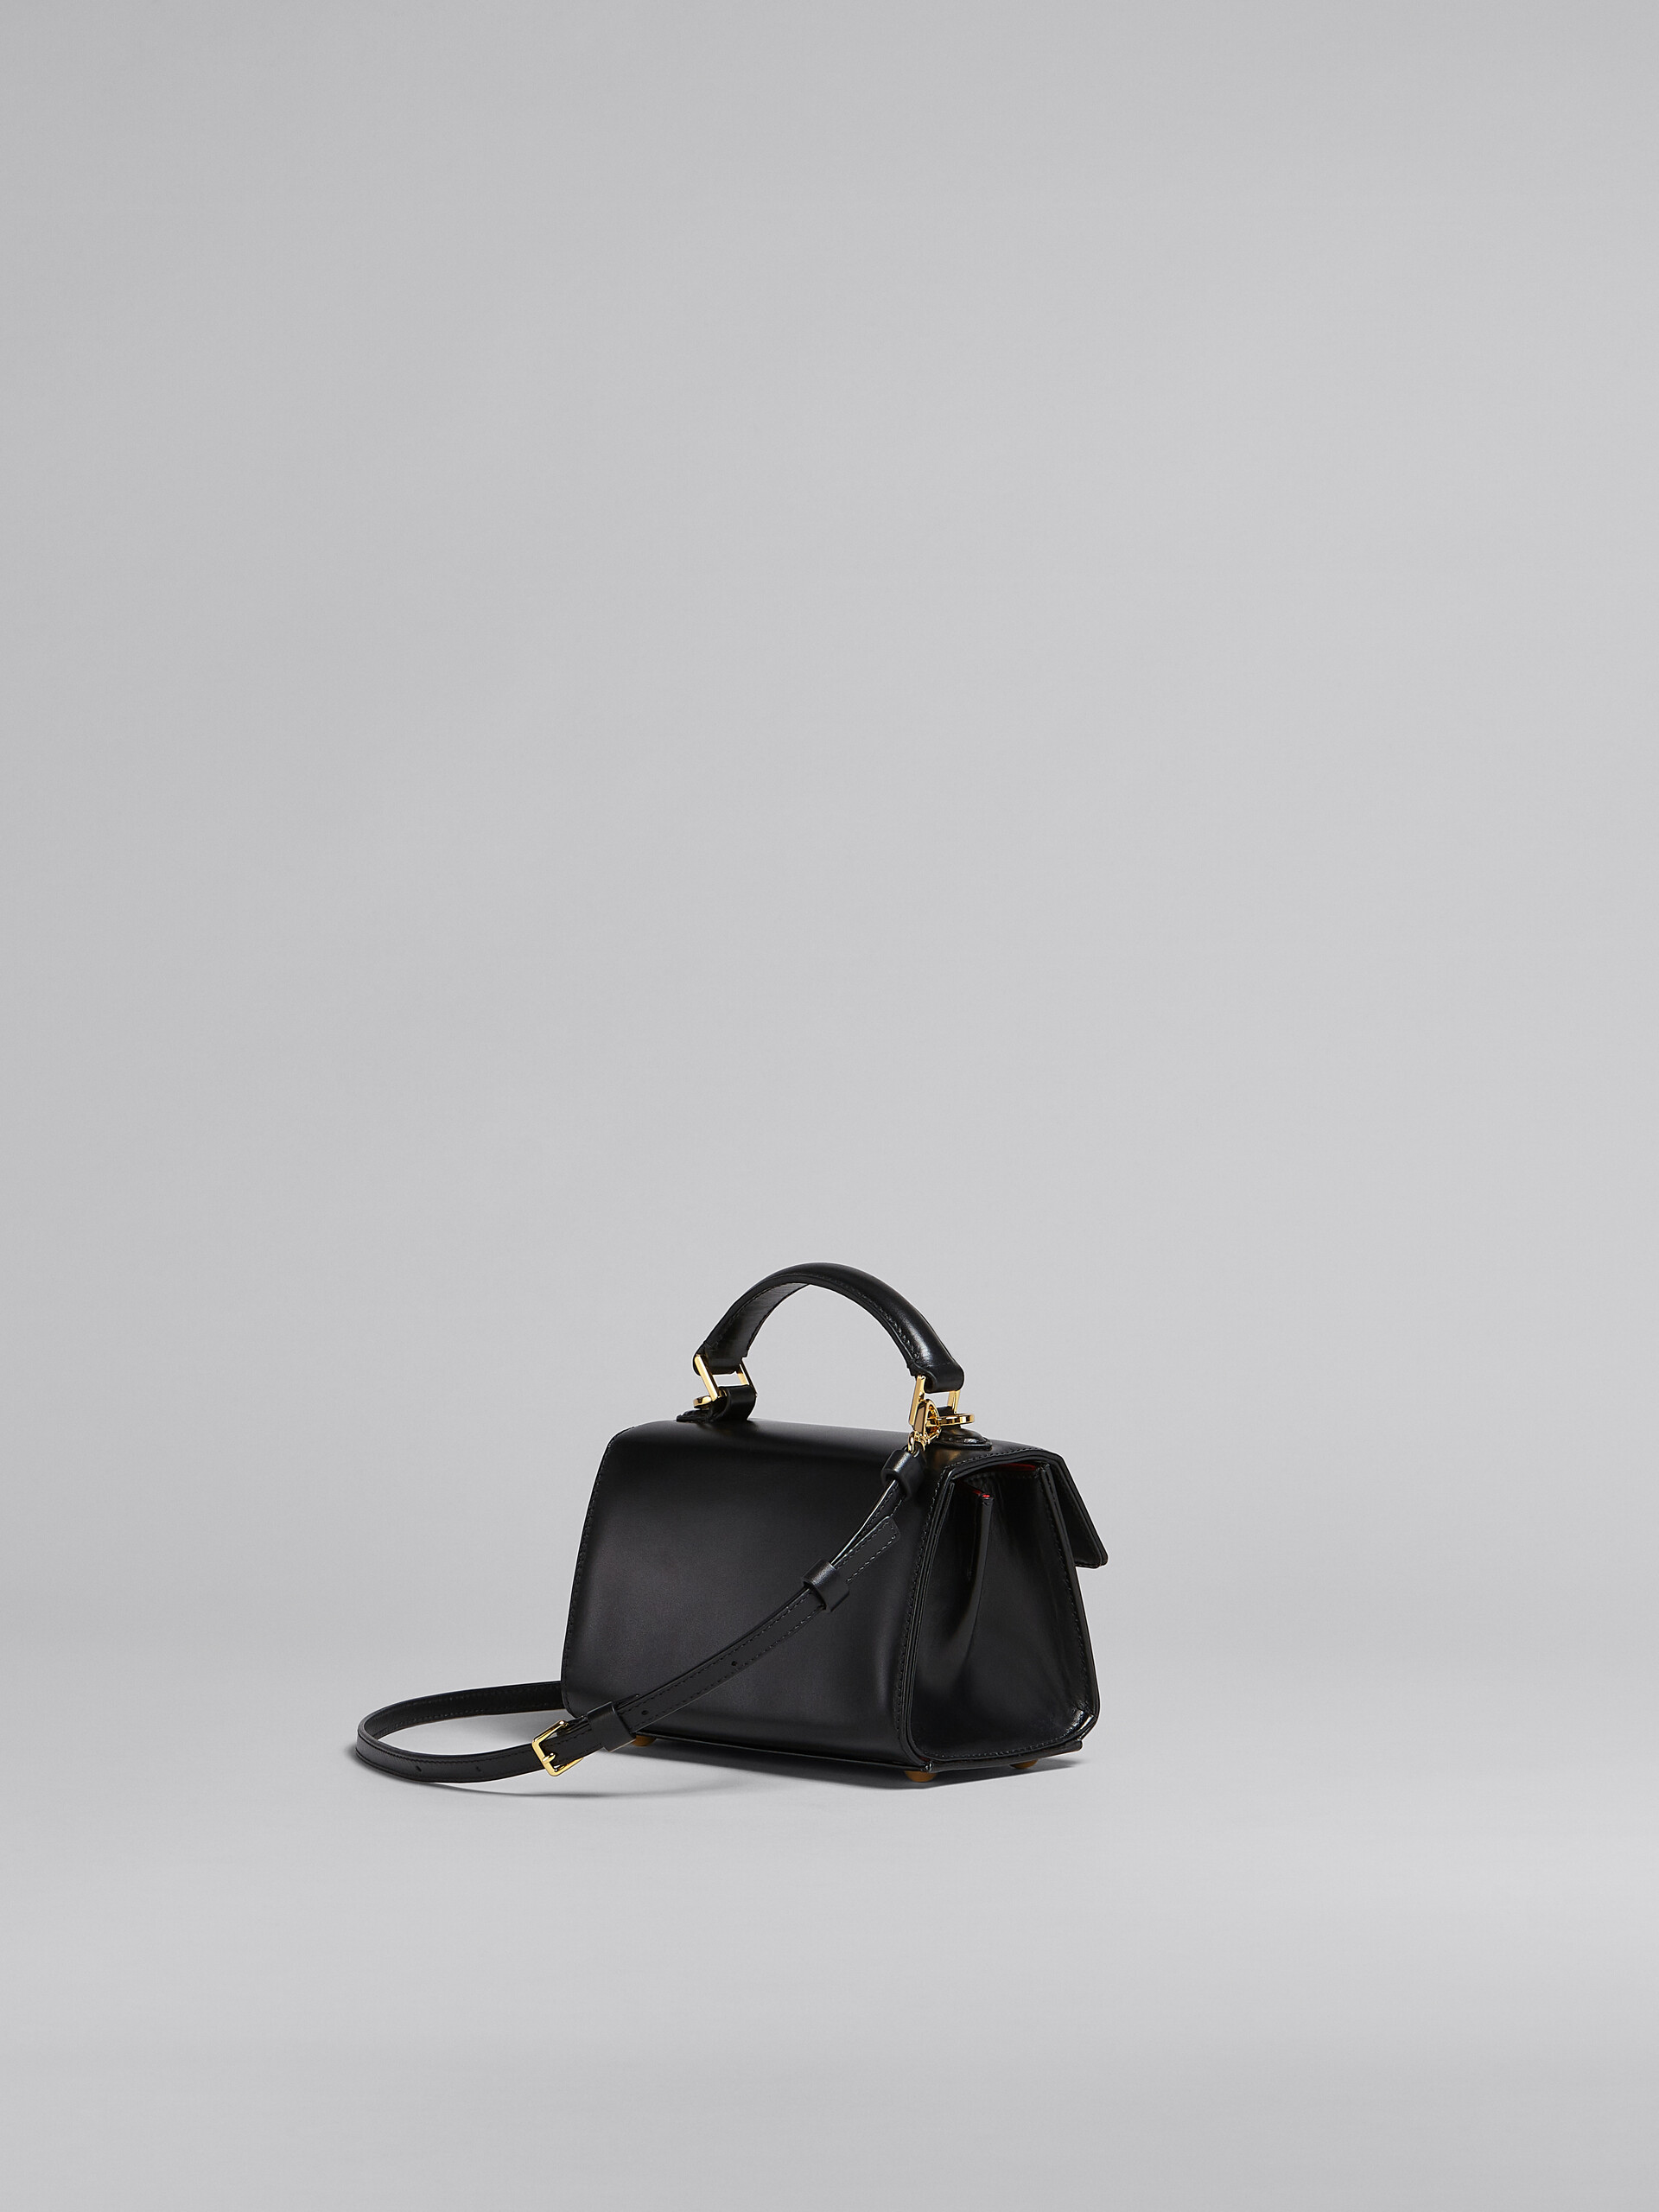 Relativity Mini Bag in black leather - Handbag - Image 3